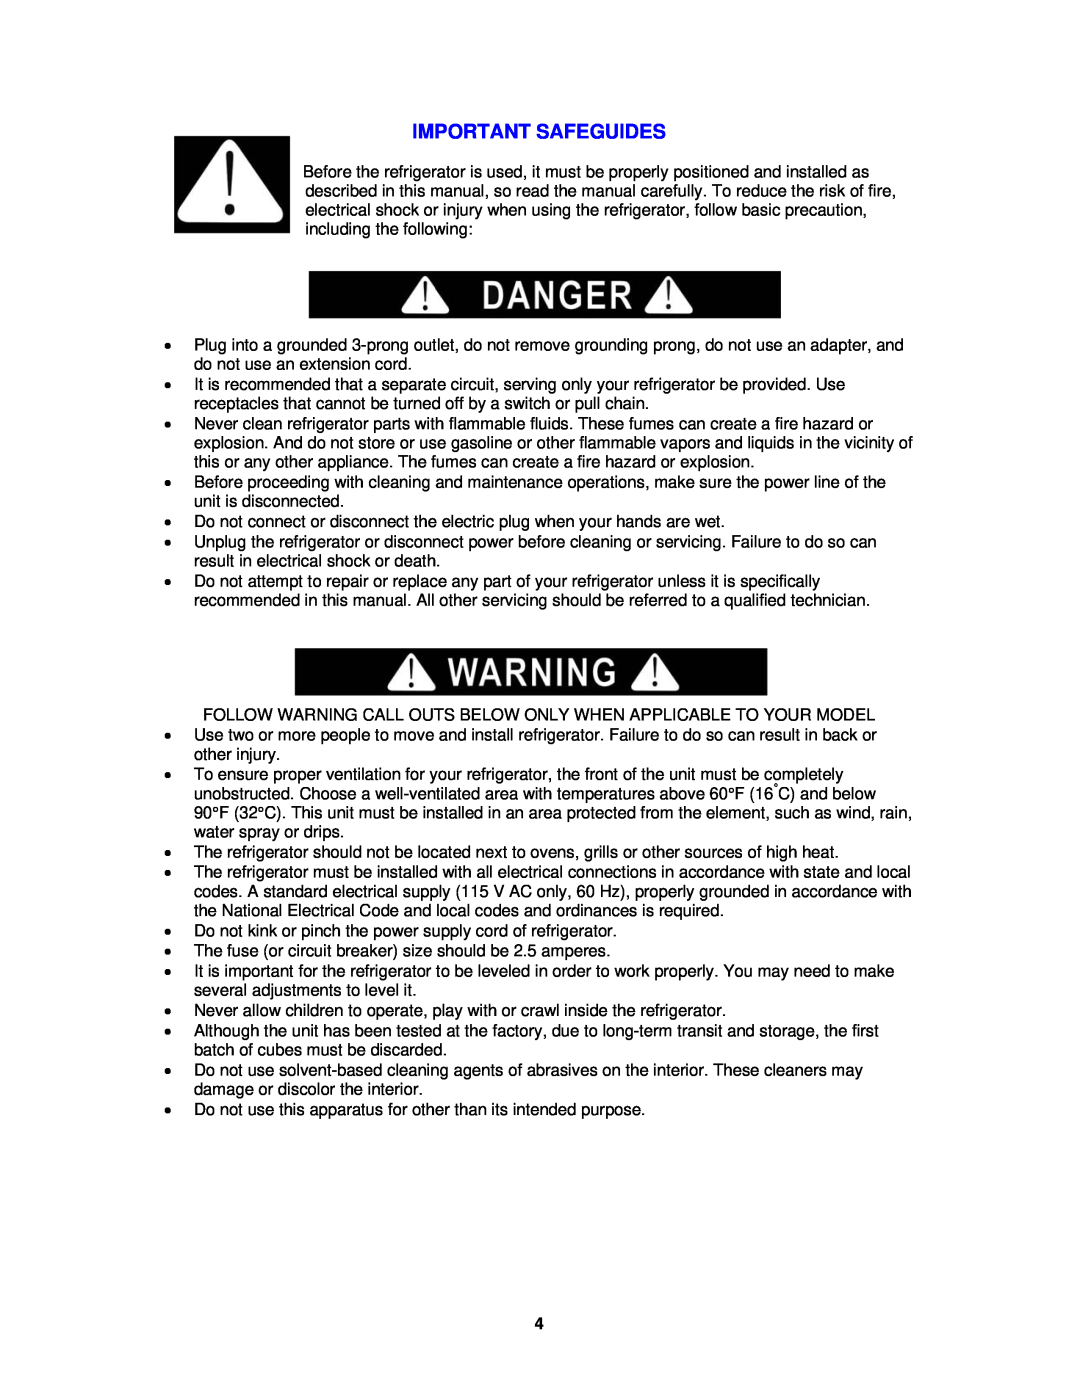 Avanti EWC1601B manual Important Safeguides 